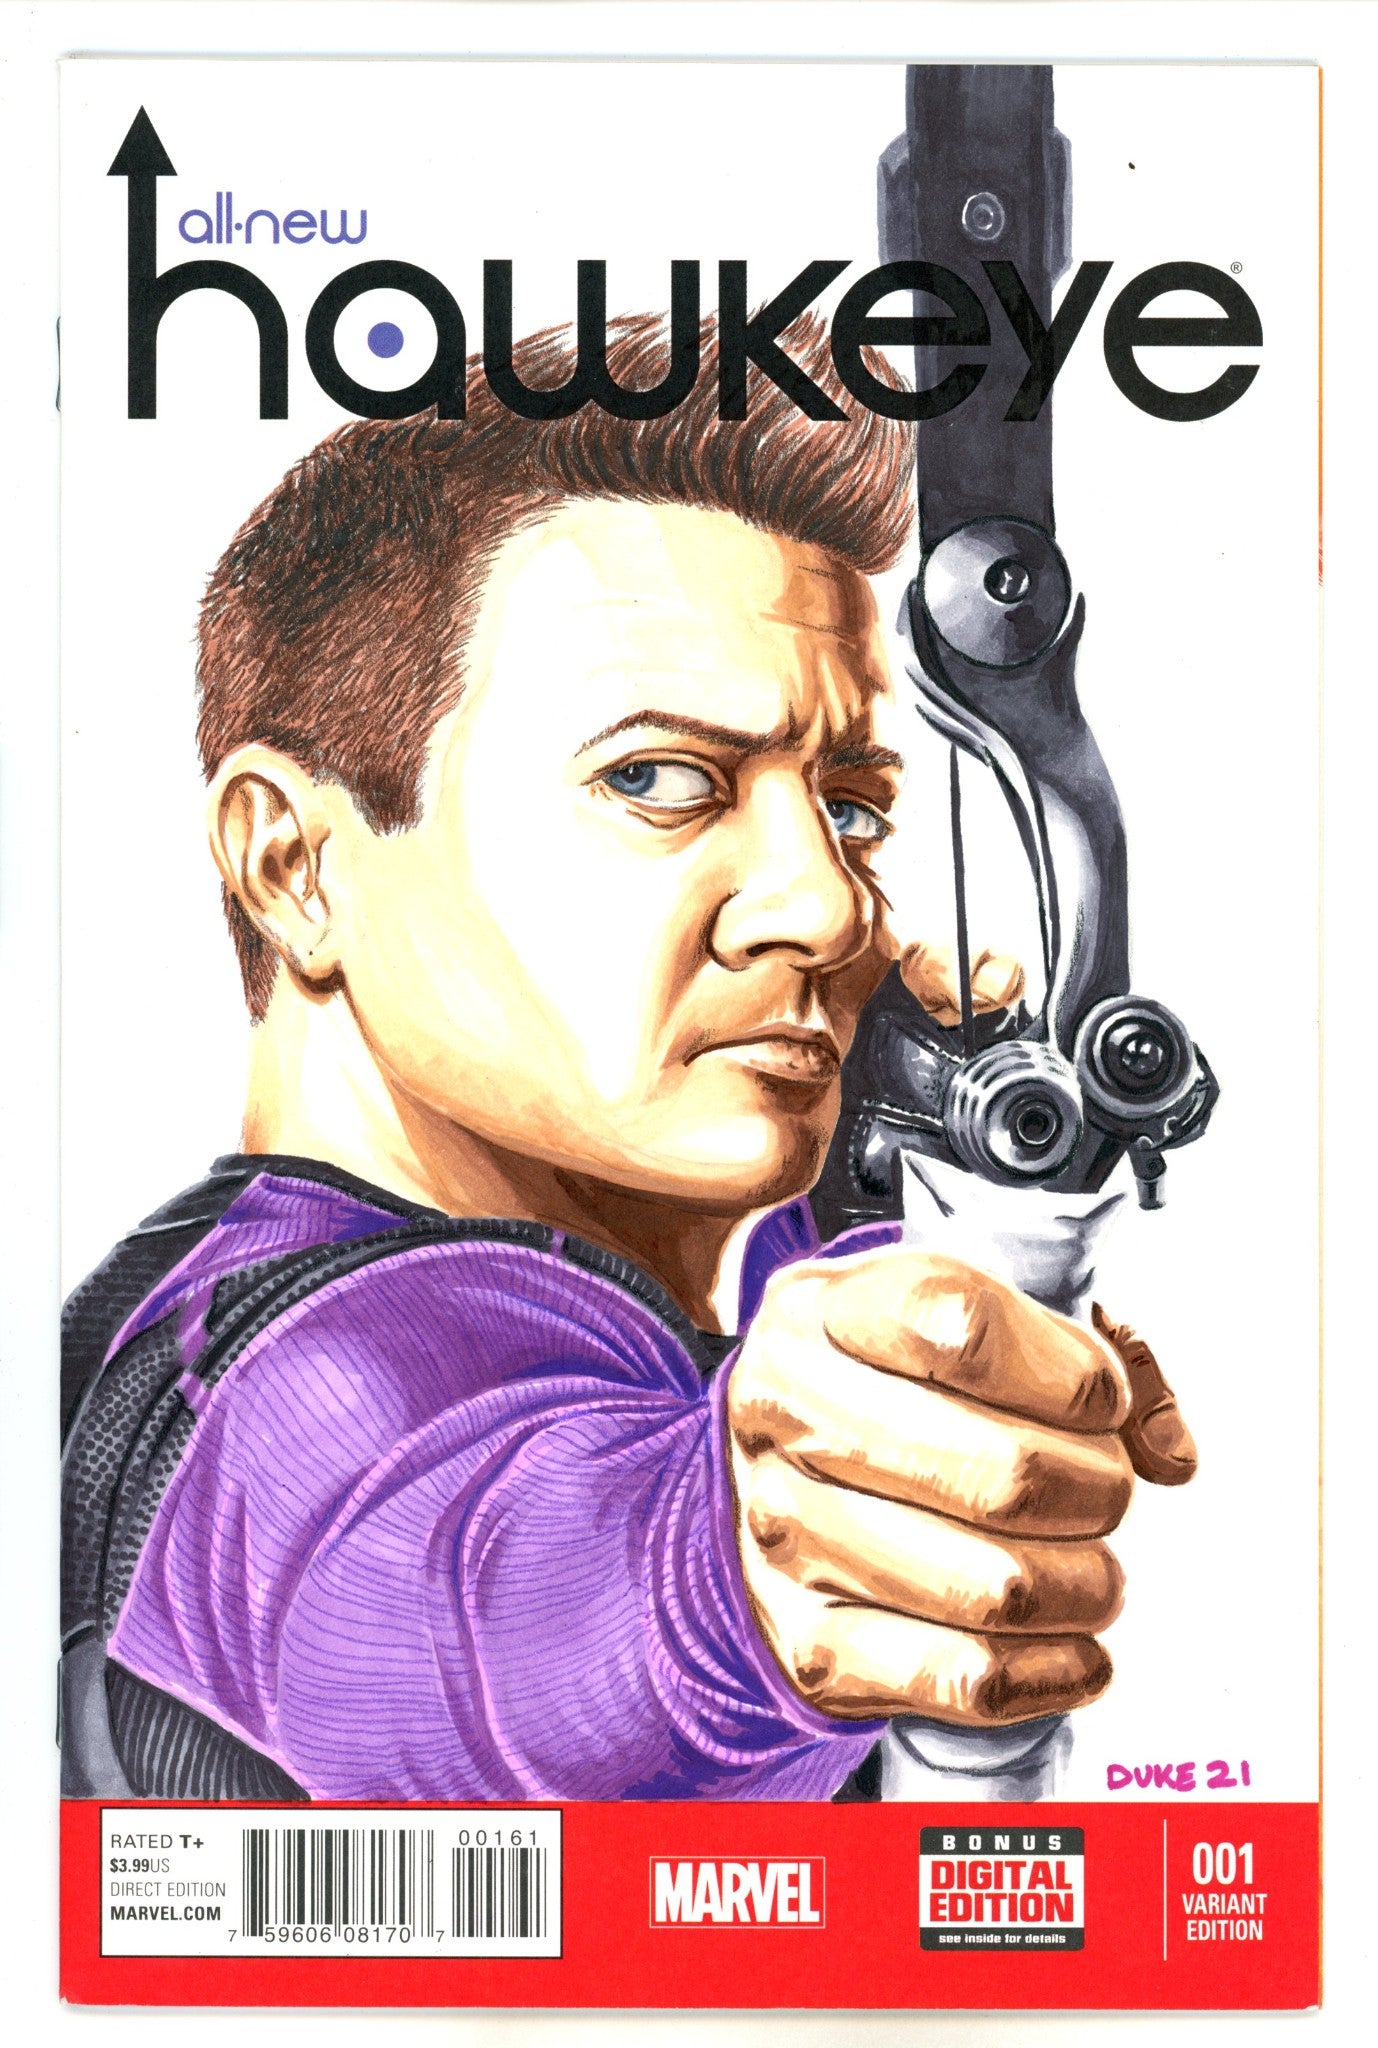 All-New Hawkeye Vol 1 1 Blank Variant With David Duke Sketch